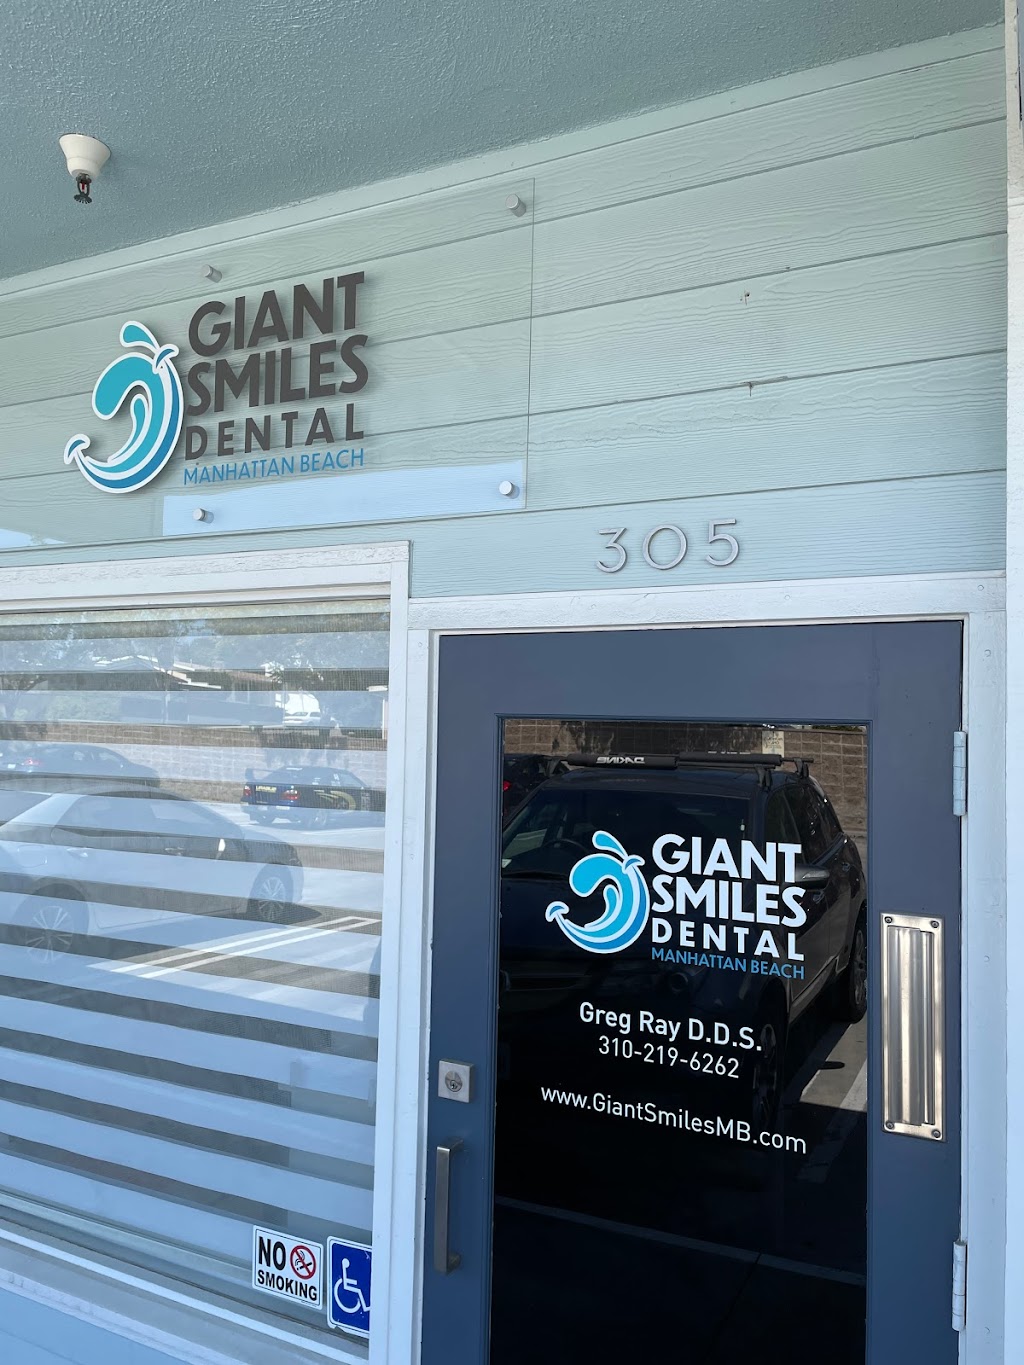 Giant Smiles Dental: Gregory Ray DDS | 500 S Sepulveda Blvd Suite #305, Manhattan Beach, CA 90266 | Phone: (310) 219-6262